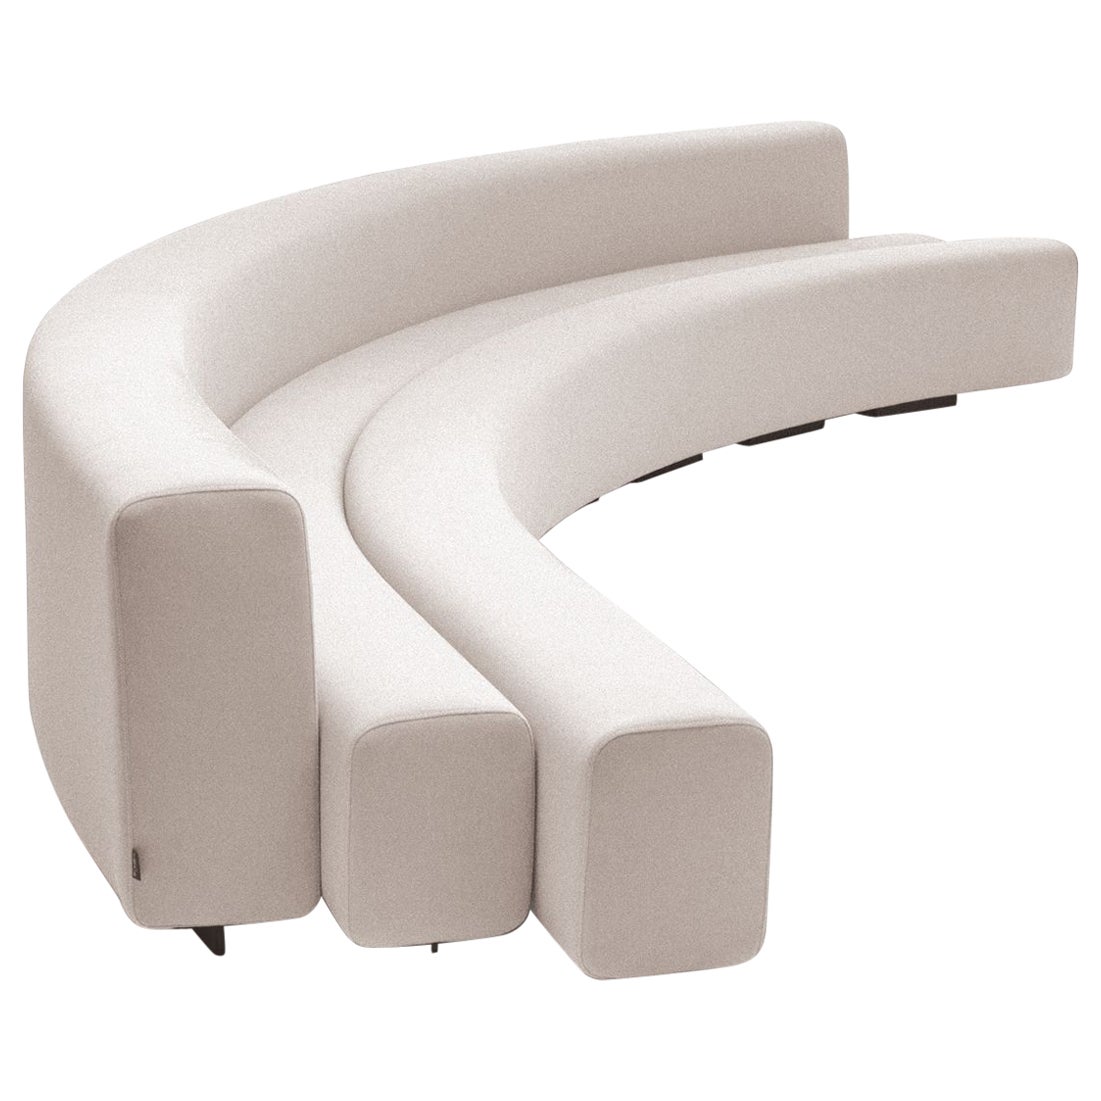 Osaka Shell White Flexible Curve Sofa 330cm by La Cividina